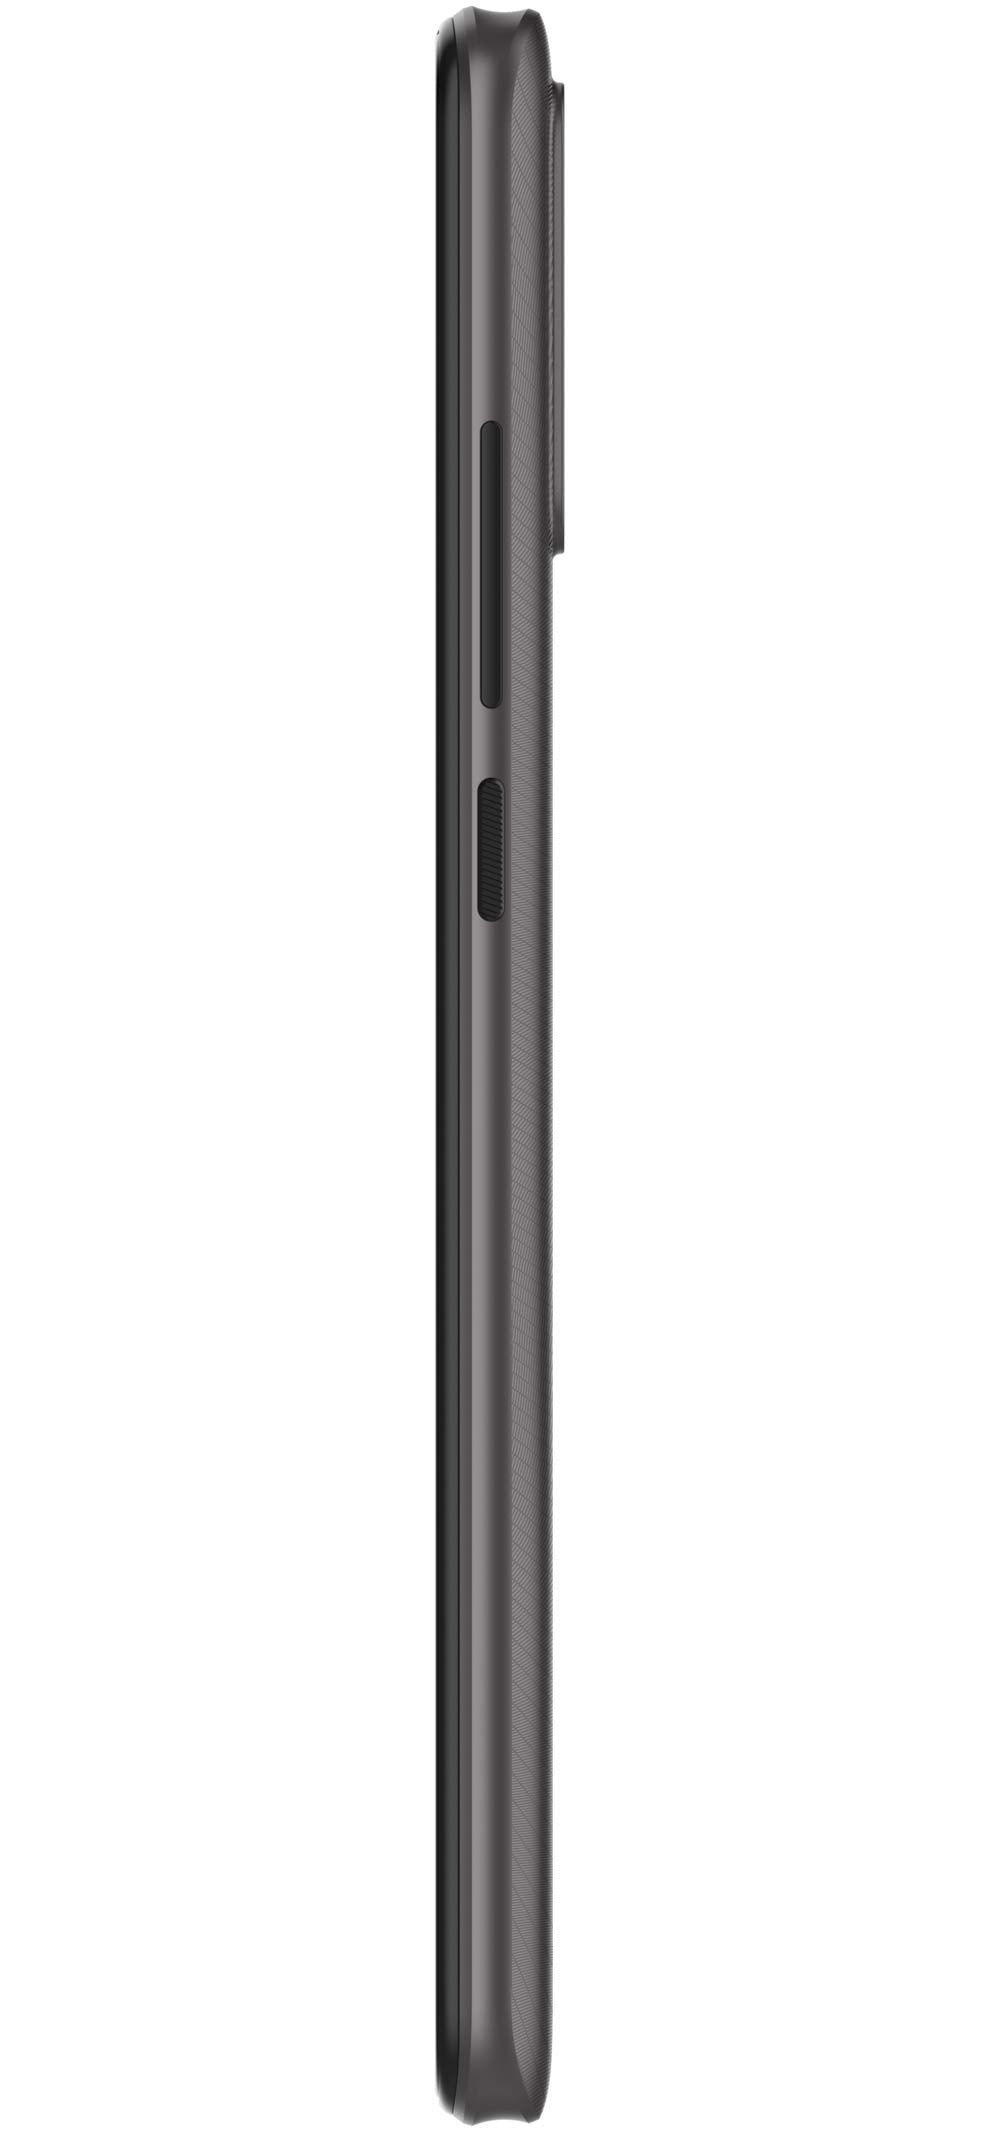 ZTE Blade A52 6.52 inch IPS HD+ Display - Black